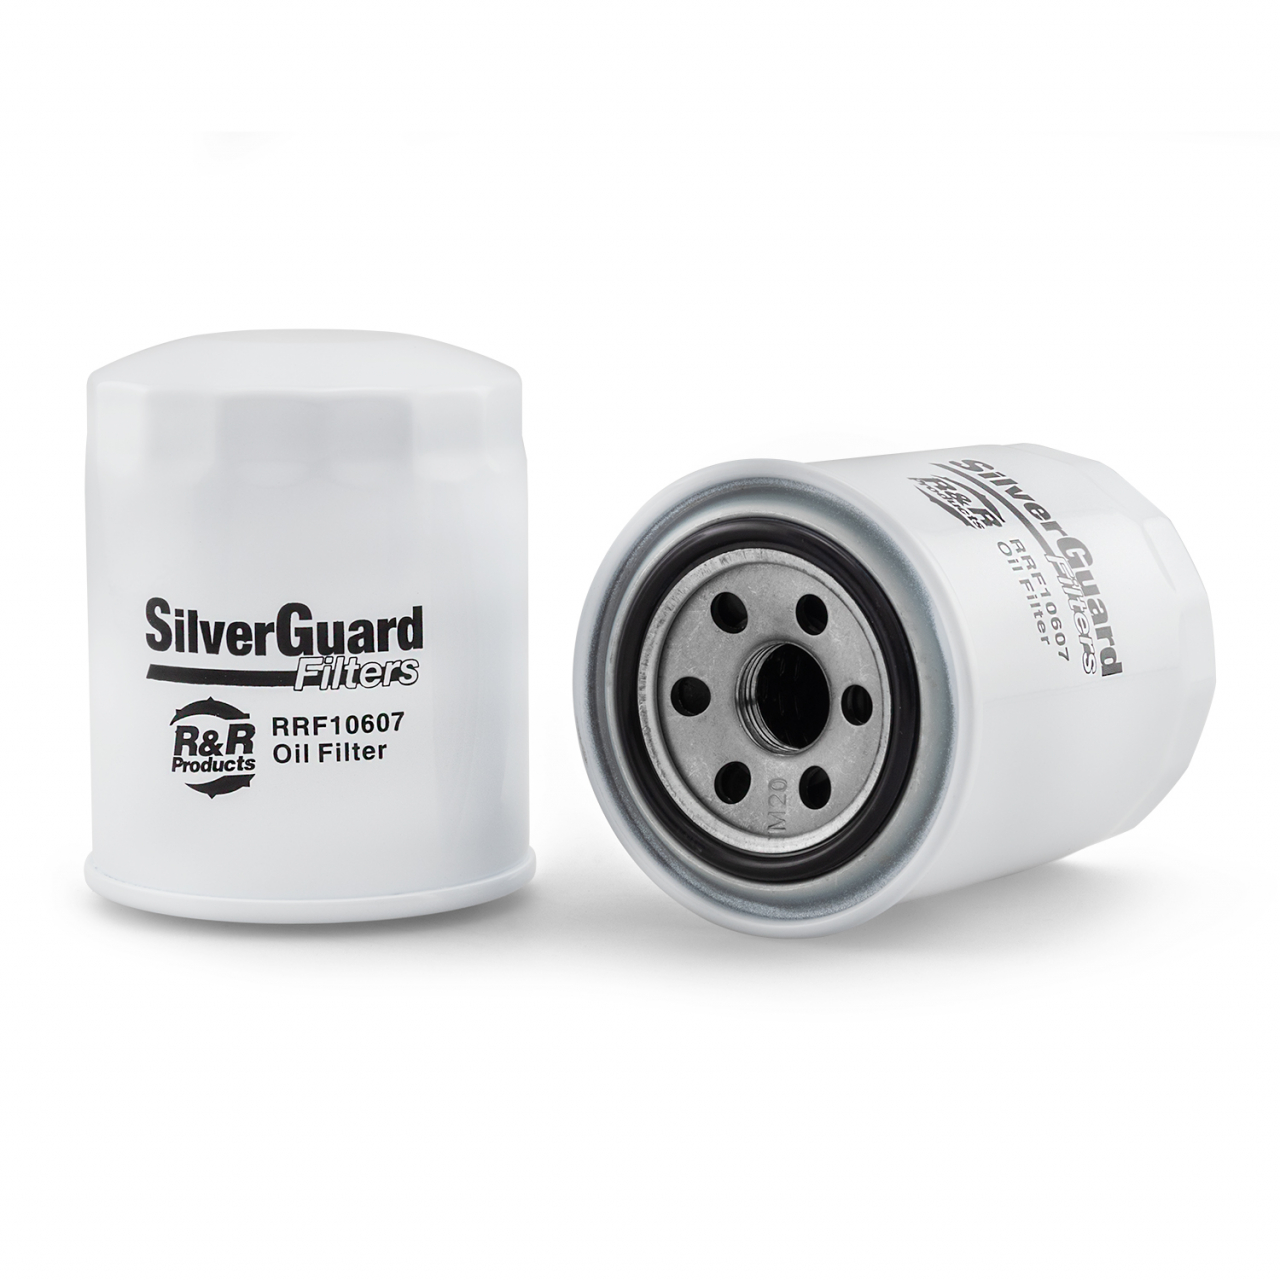 Silverguard oil filter - 3 3/4" long